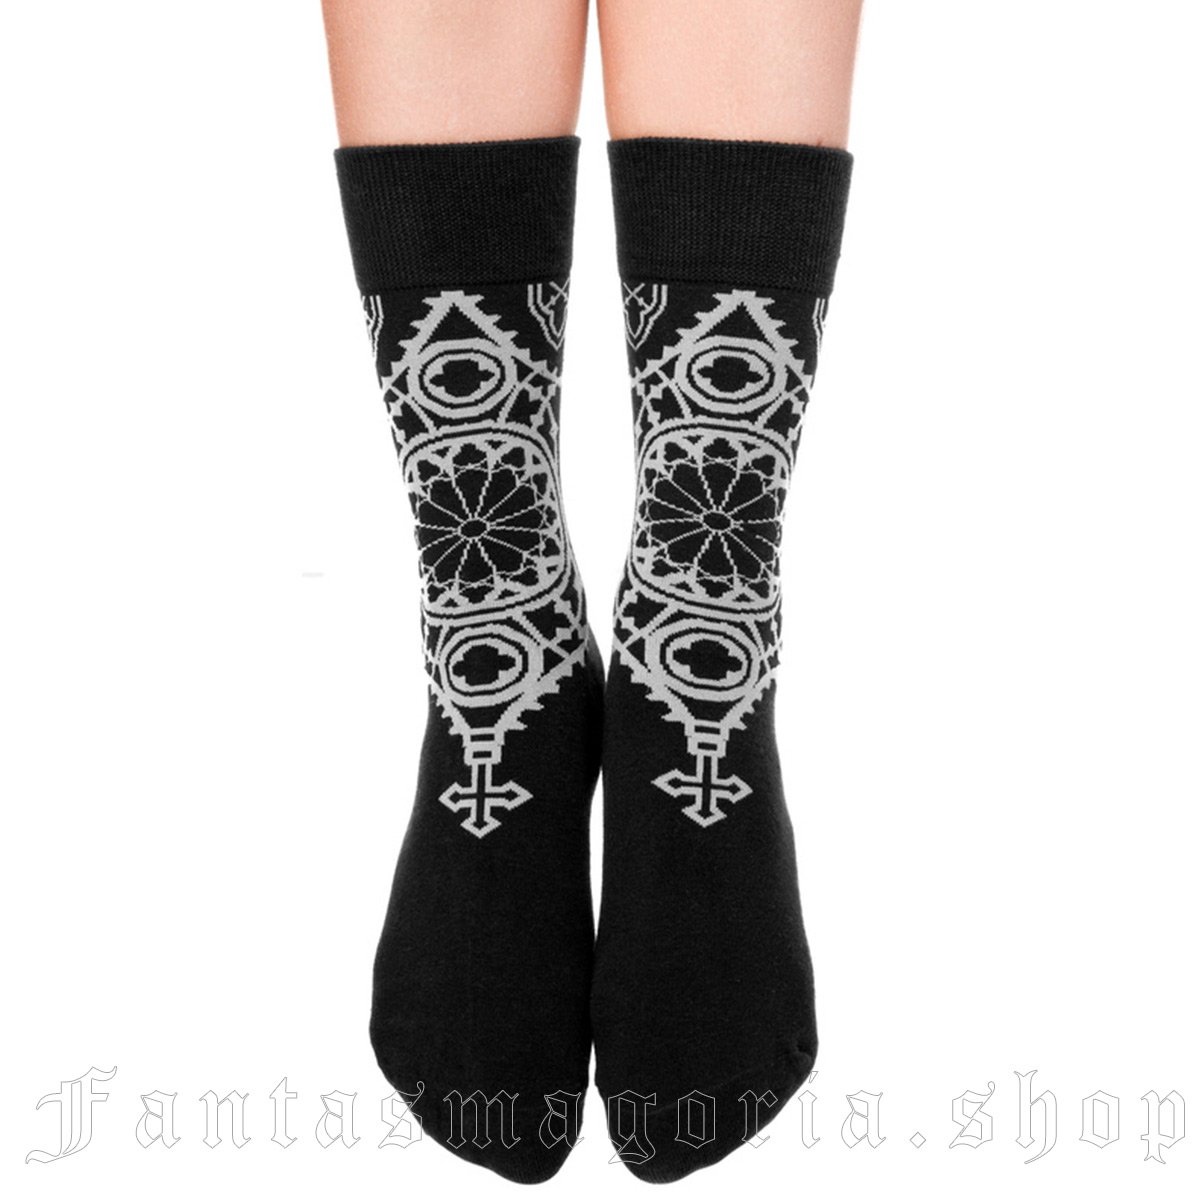 Gothic black ornate jacquard socks. - Restyle - RES5900949917719